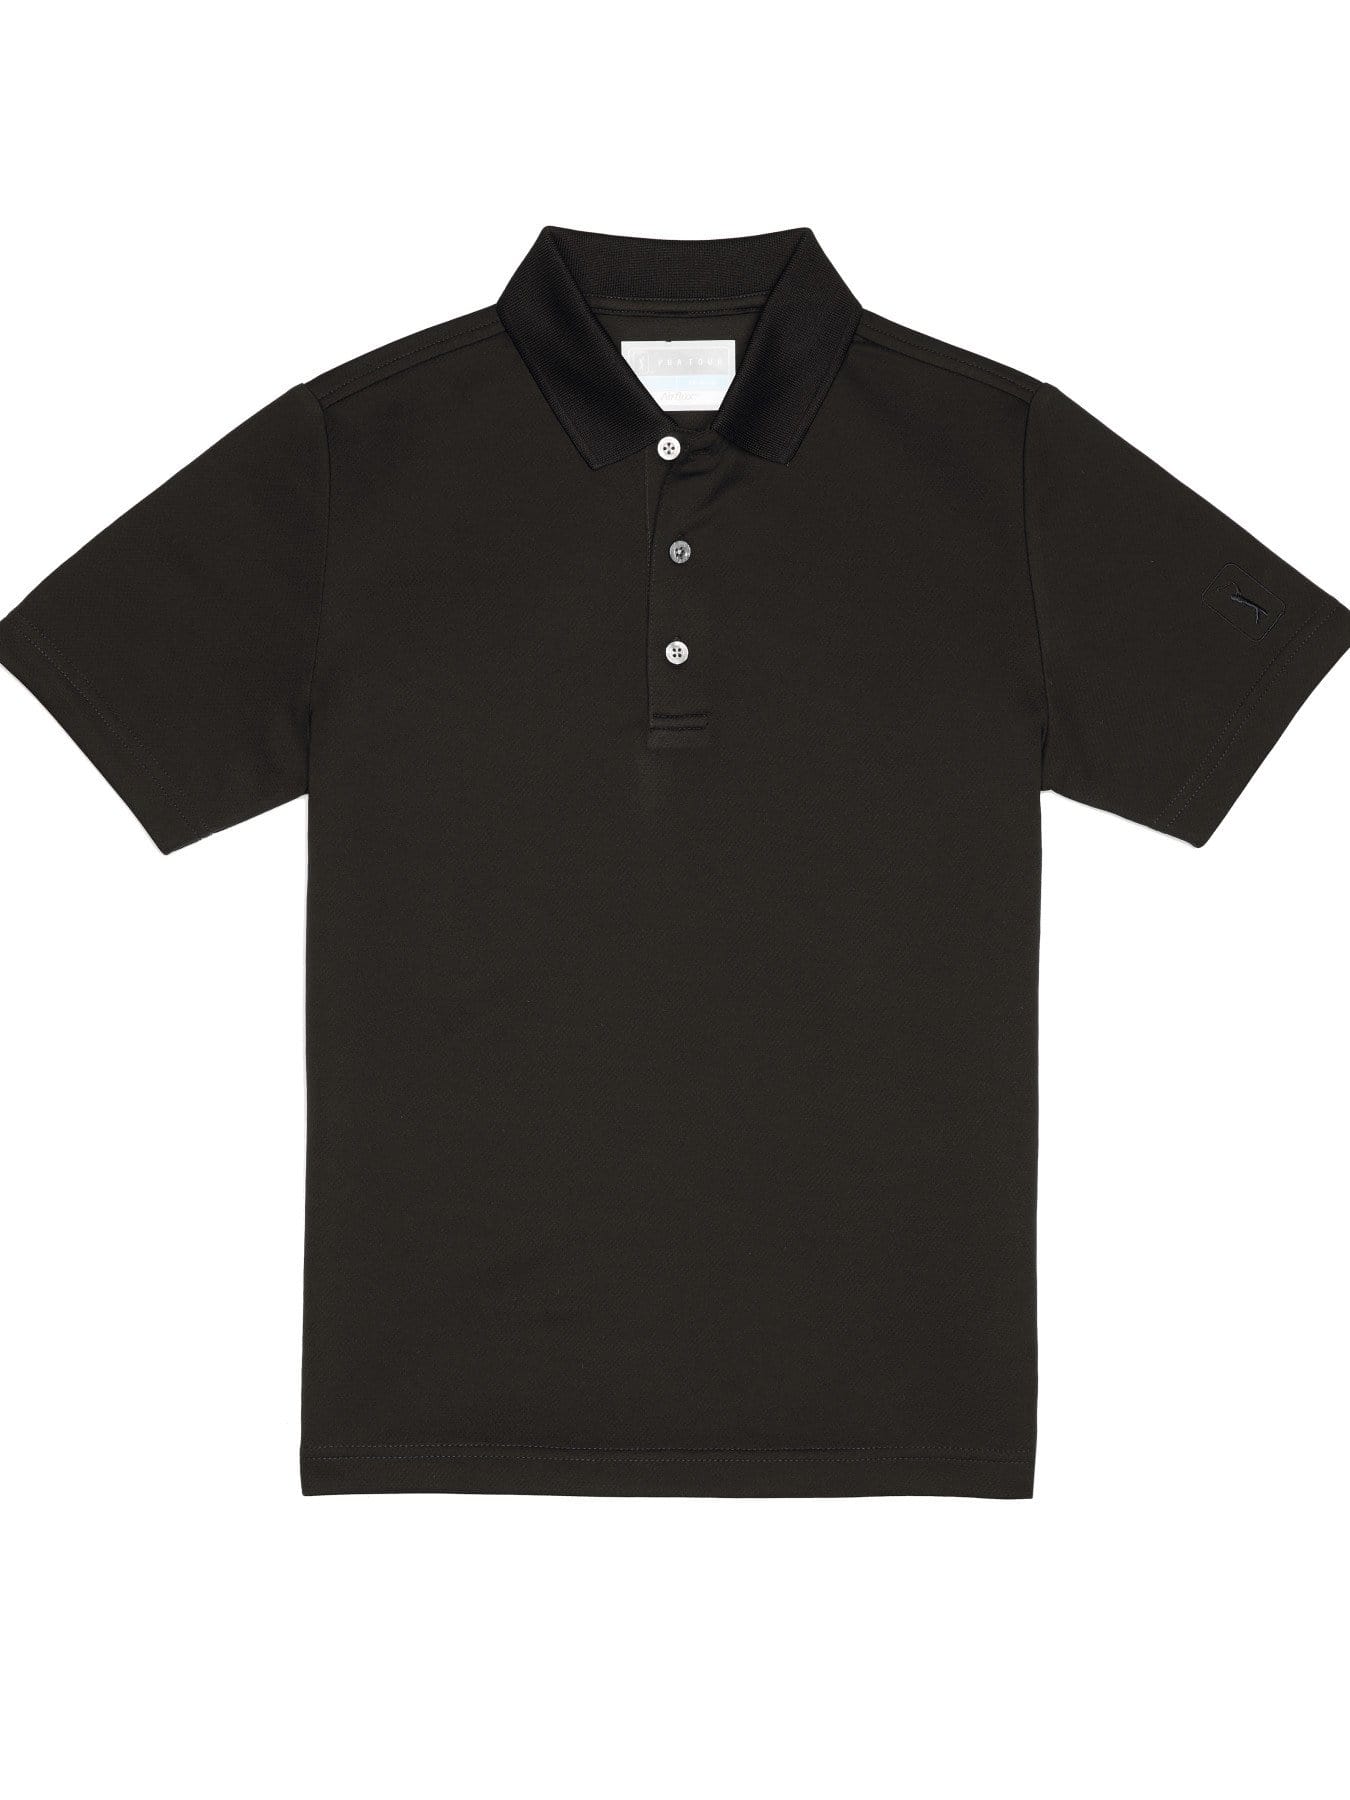 PGA TOUR Apparel Boys Short Sleeve AirFlux™ Polo Shirt, Size Large, Black, 100% Polyester | Golf Apparel Shop